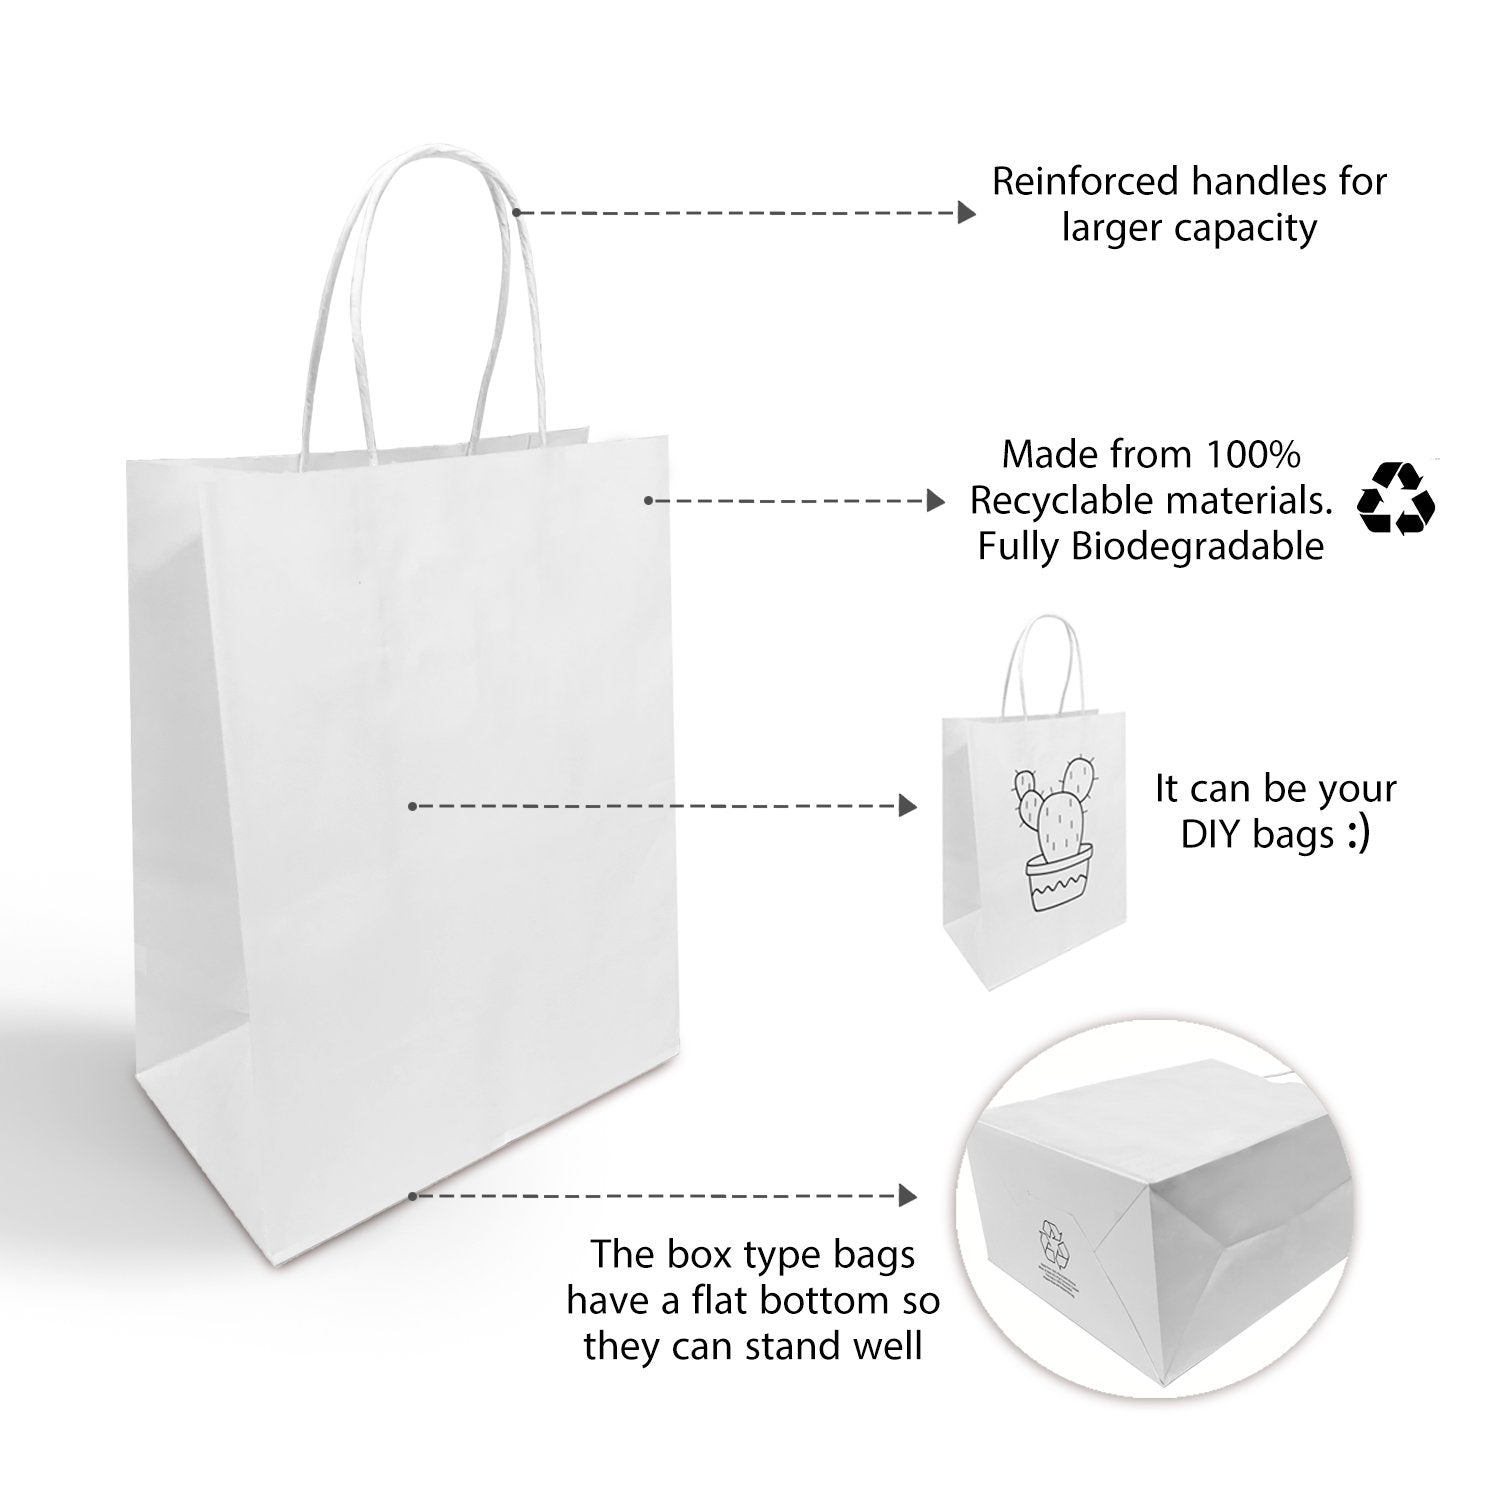 White Gloss Gift Bags, Cub 8x4x10, 100 Pack